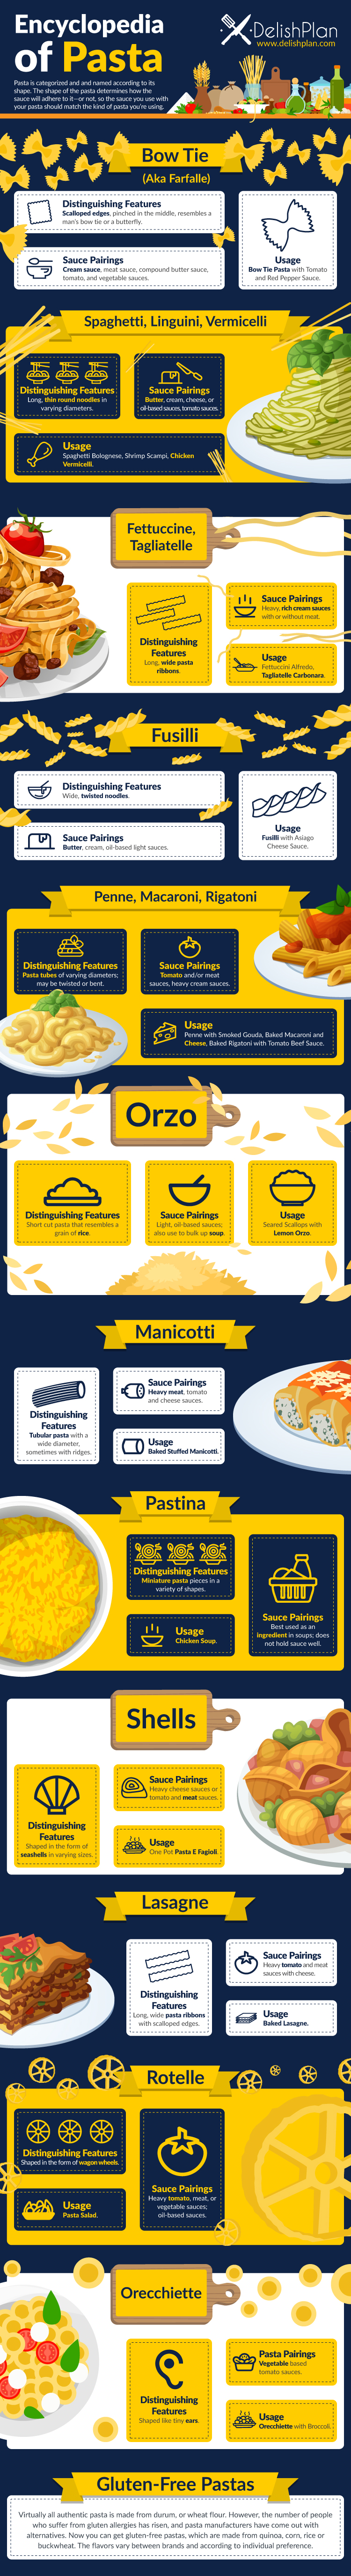 infographic: encyclopedia of pasta